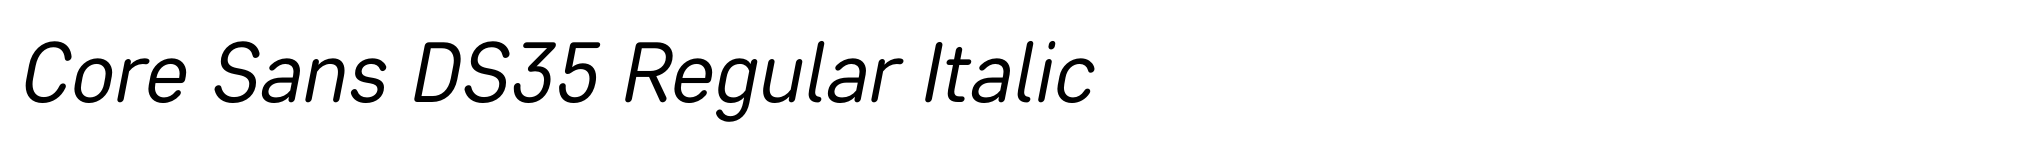 Core Sans DS35 Regular Italic image